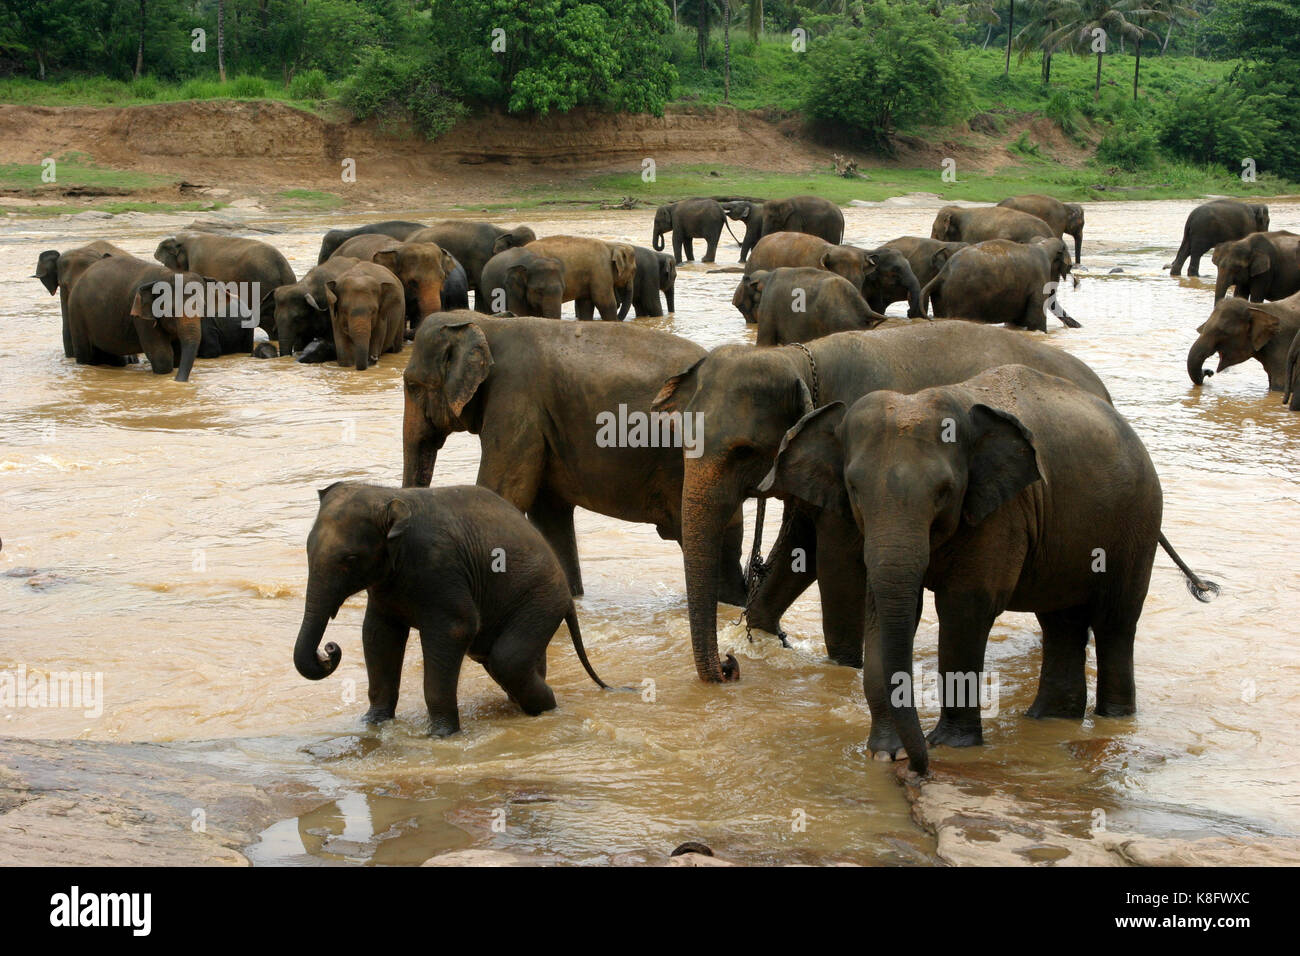 Pinnawala Elefantenwaisenhaus, Sri Lanka Elefanten beim Baden am Ma Oya Fluss in Pinnawala Elefantenwaisenhaus in der Sabaragamuwa Provinz, auf halbem Weg zwischen Th Stockfoto